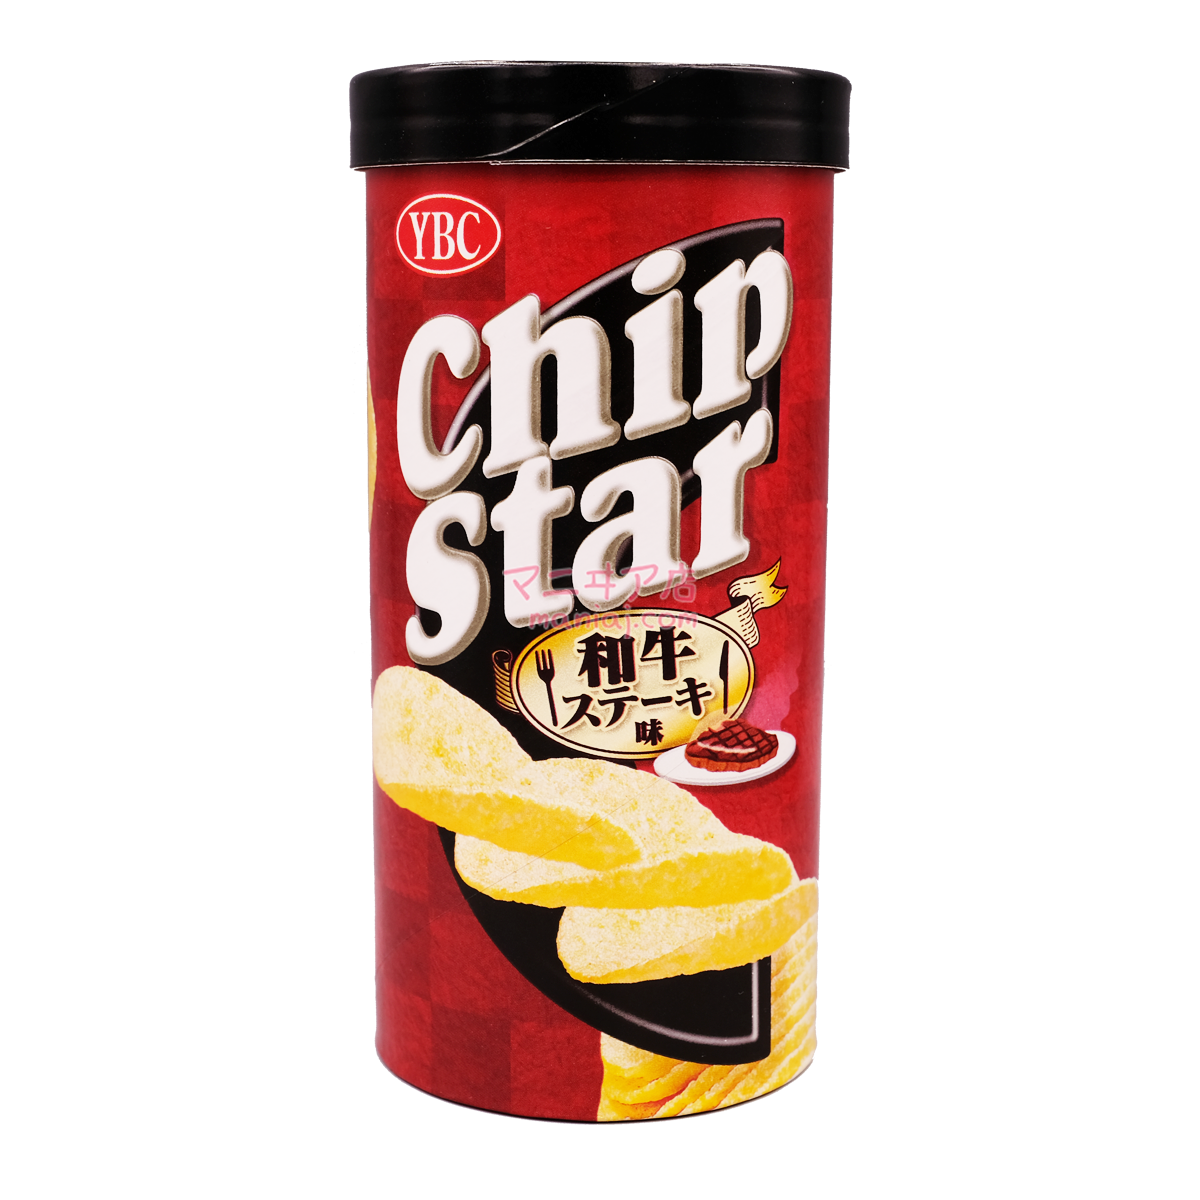 Chip Star Wagyu Steak Potato Chips